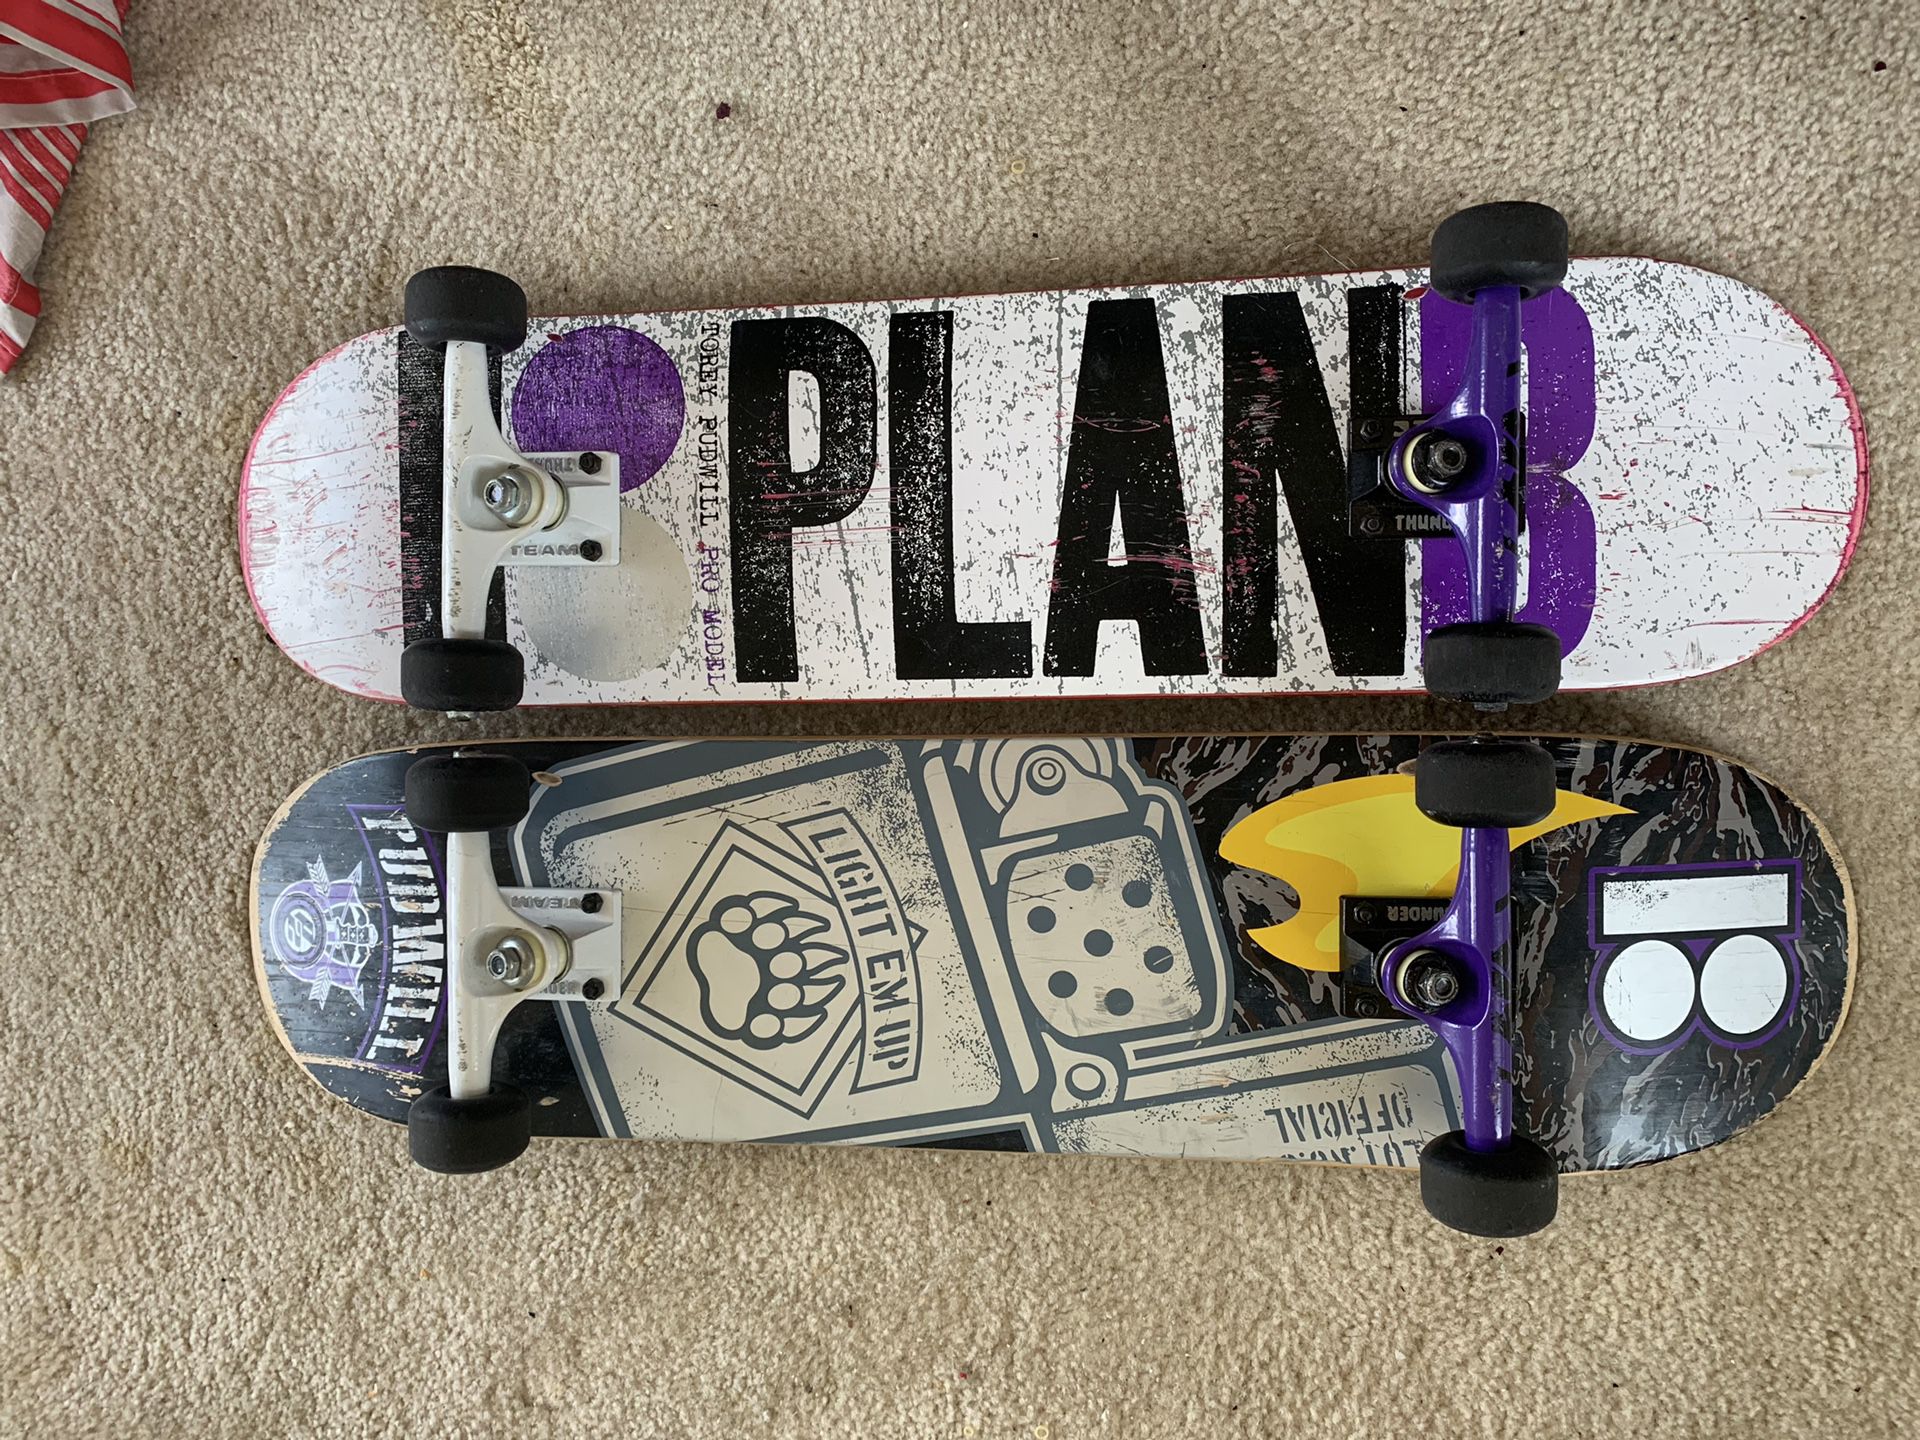 2 Plan B skateboards